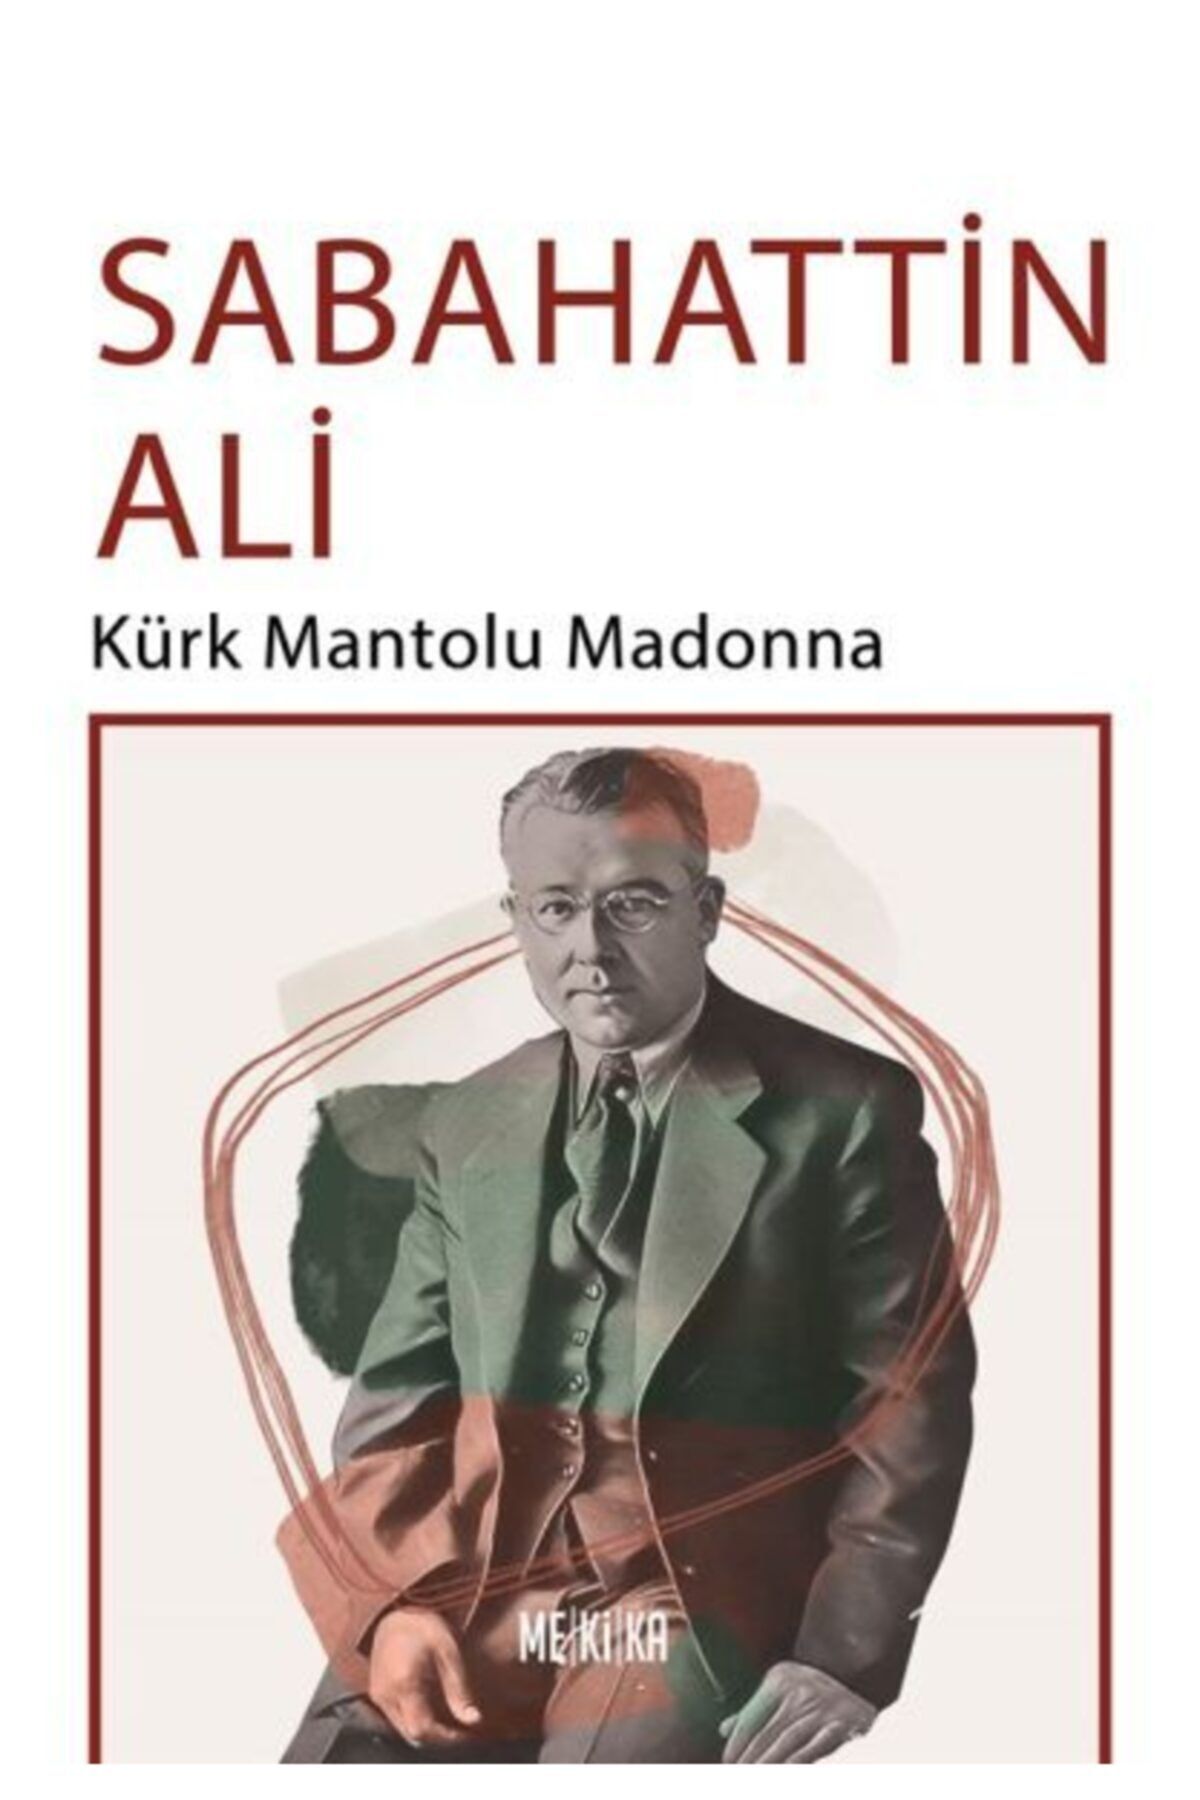 MEKİKA YAYINLARI Kürk Mantolu Madonna     Sabahattin Ali